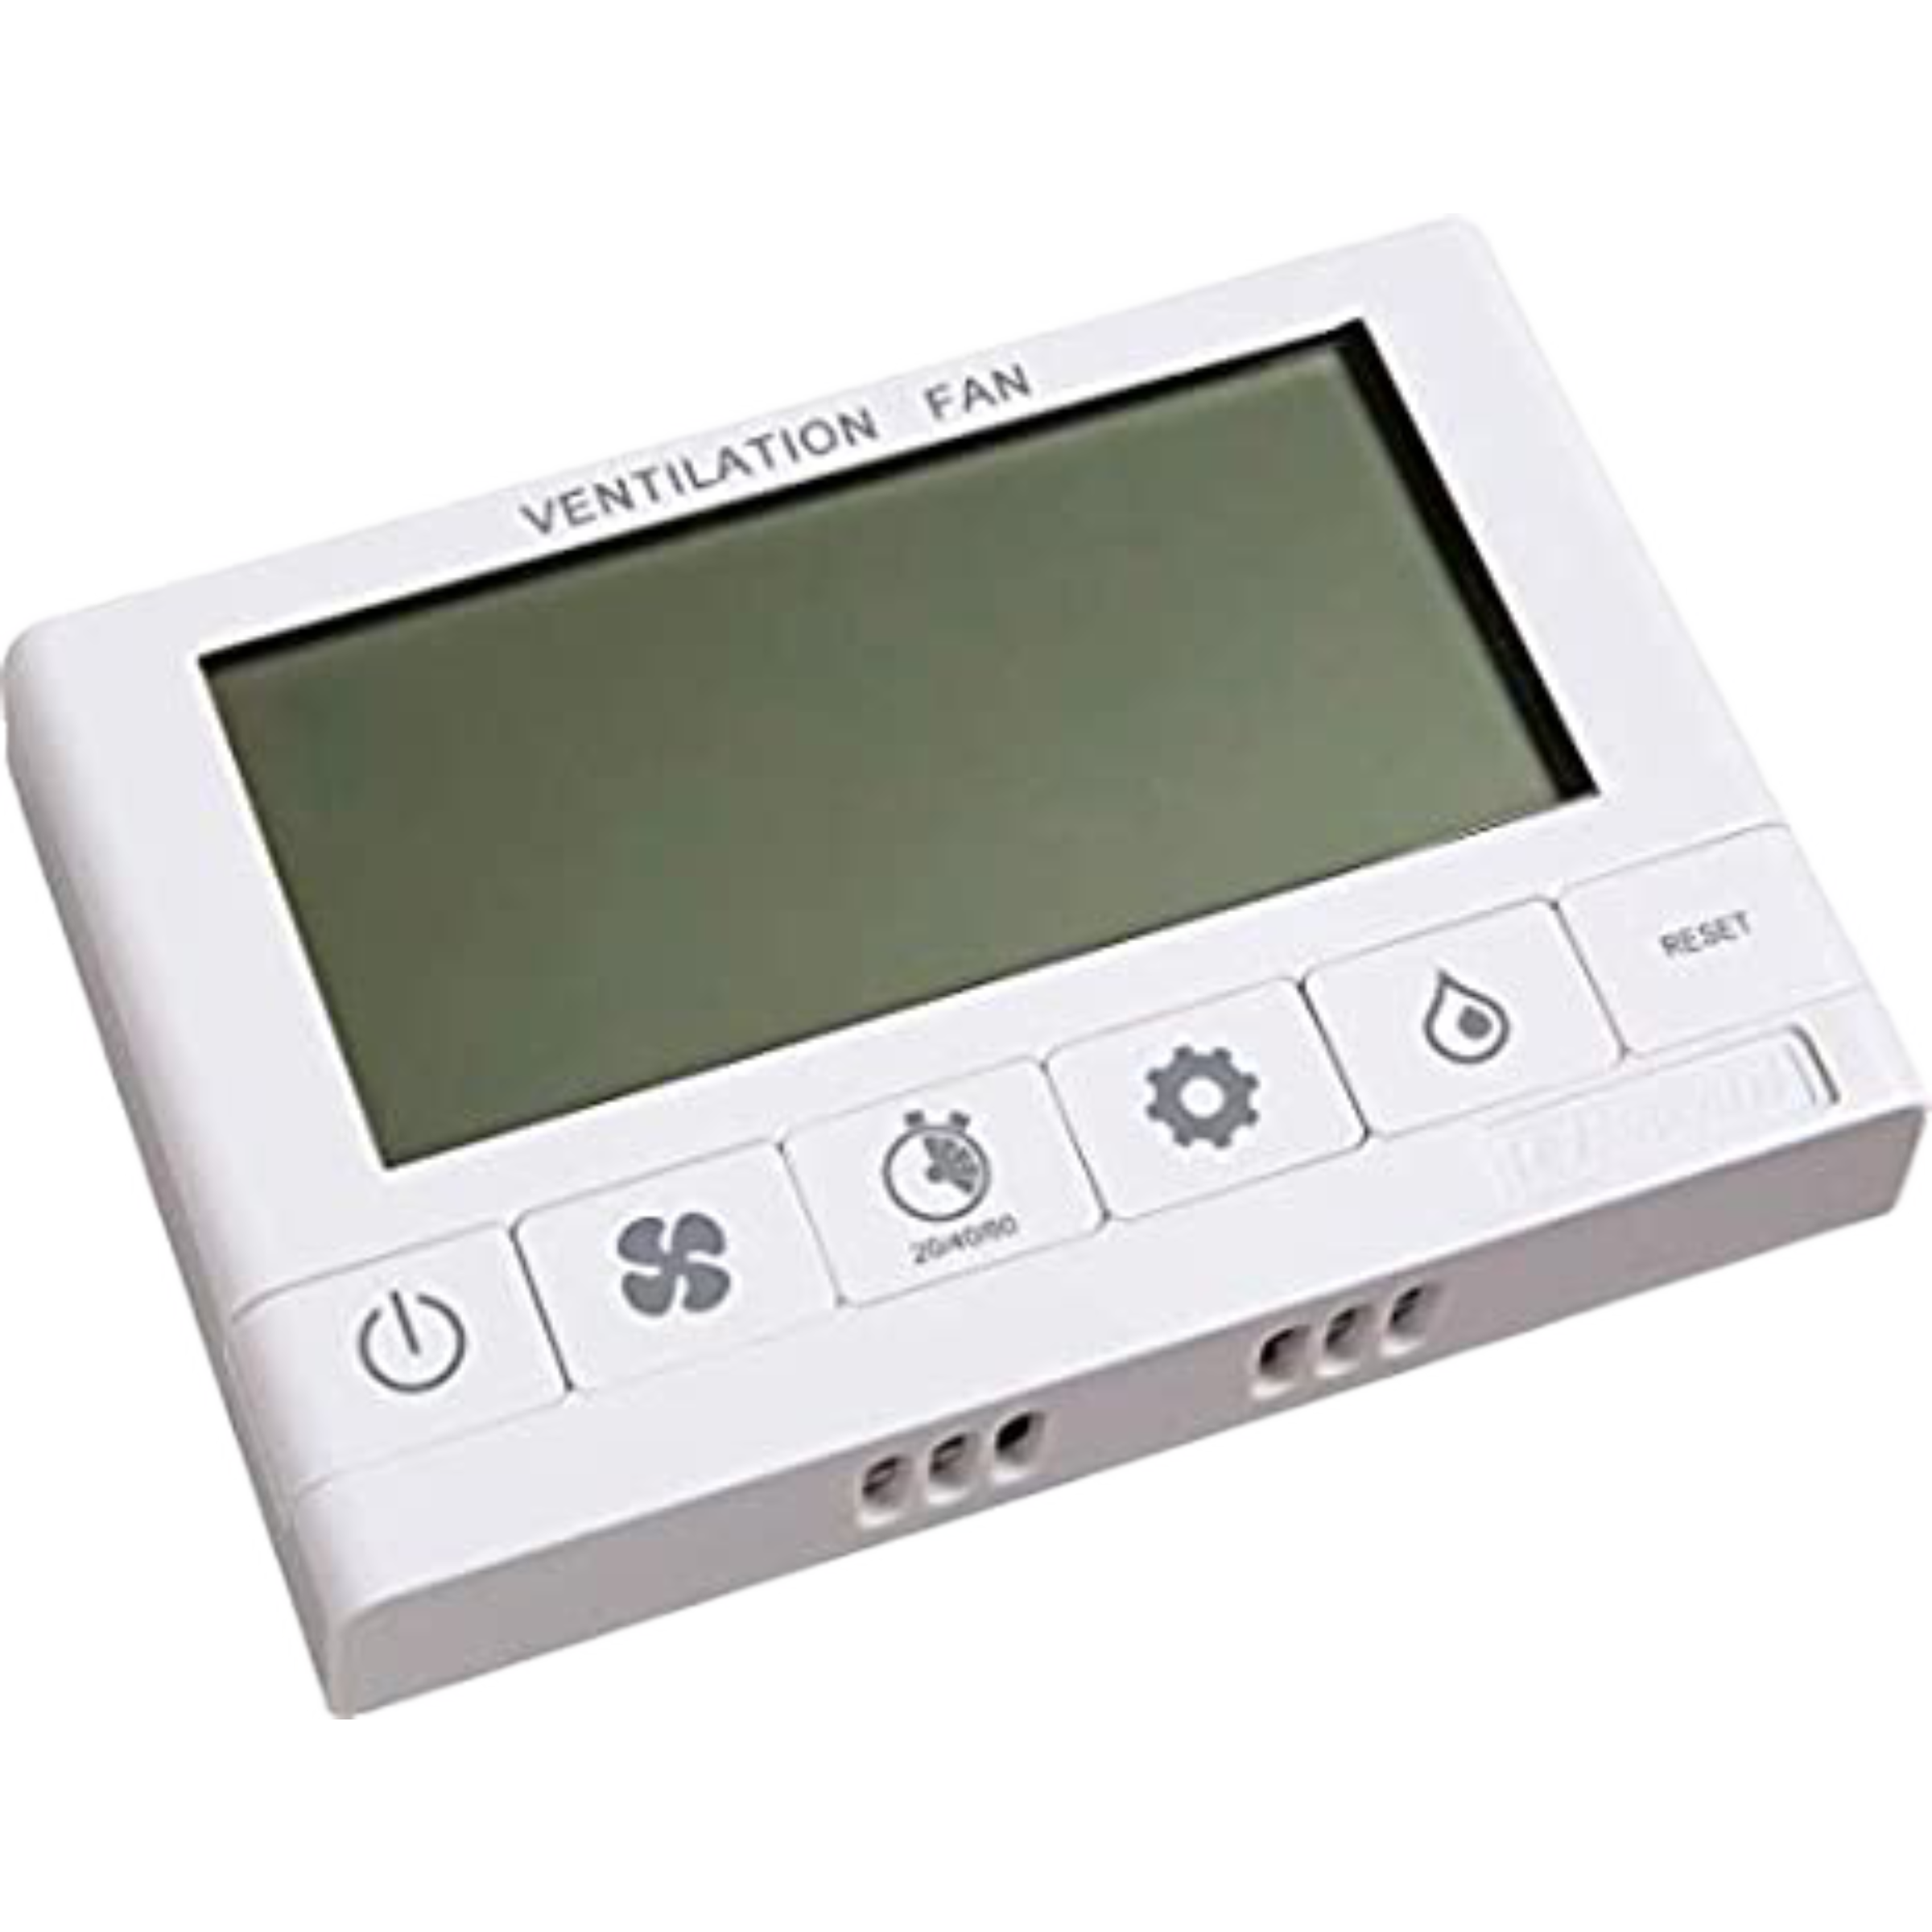 99-DXPL03 Lifebreath Digital Wall Control 5 Speed Control, LCD Display Control, 60 Hz, 120 V